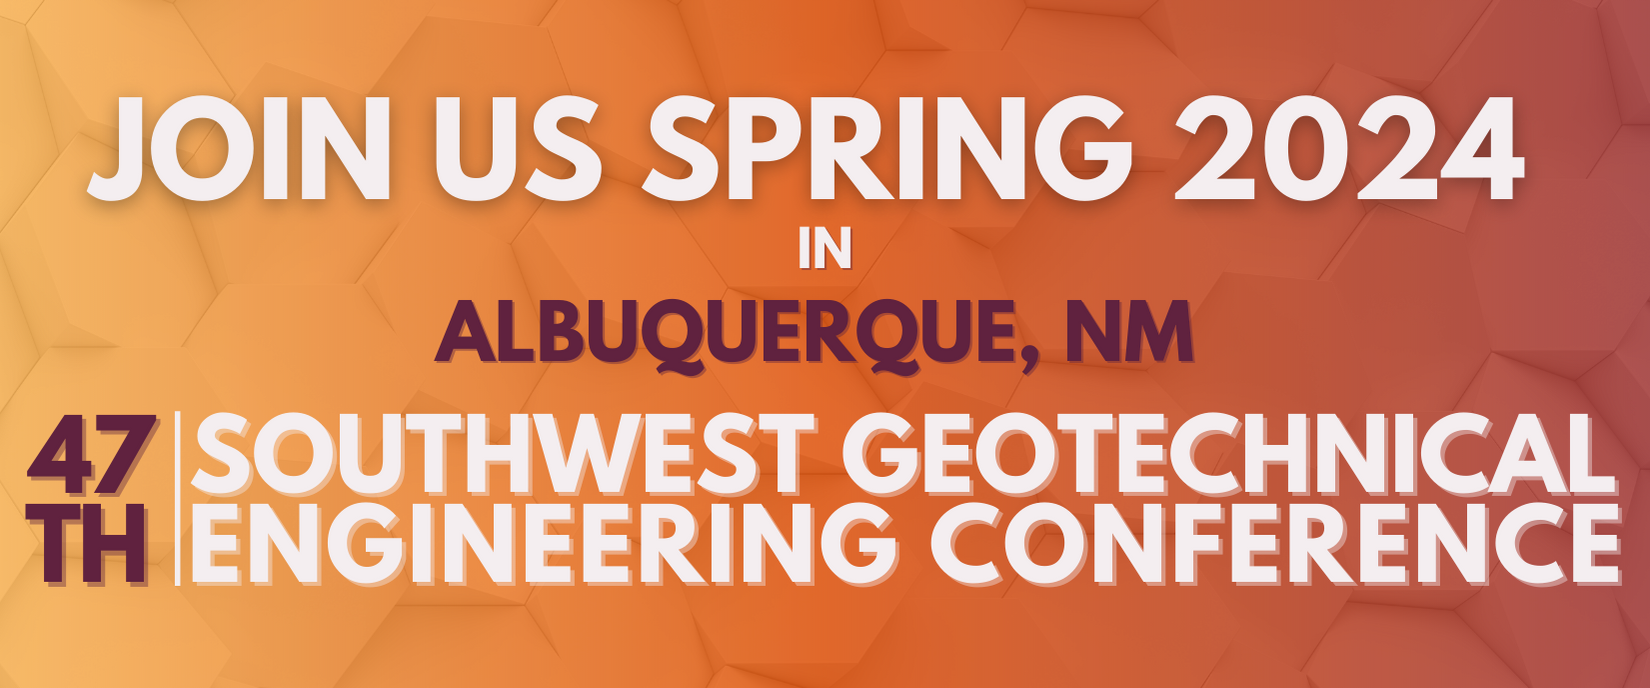 2024 Southwest Geotechnical Engineering Conference University of